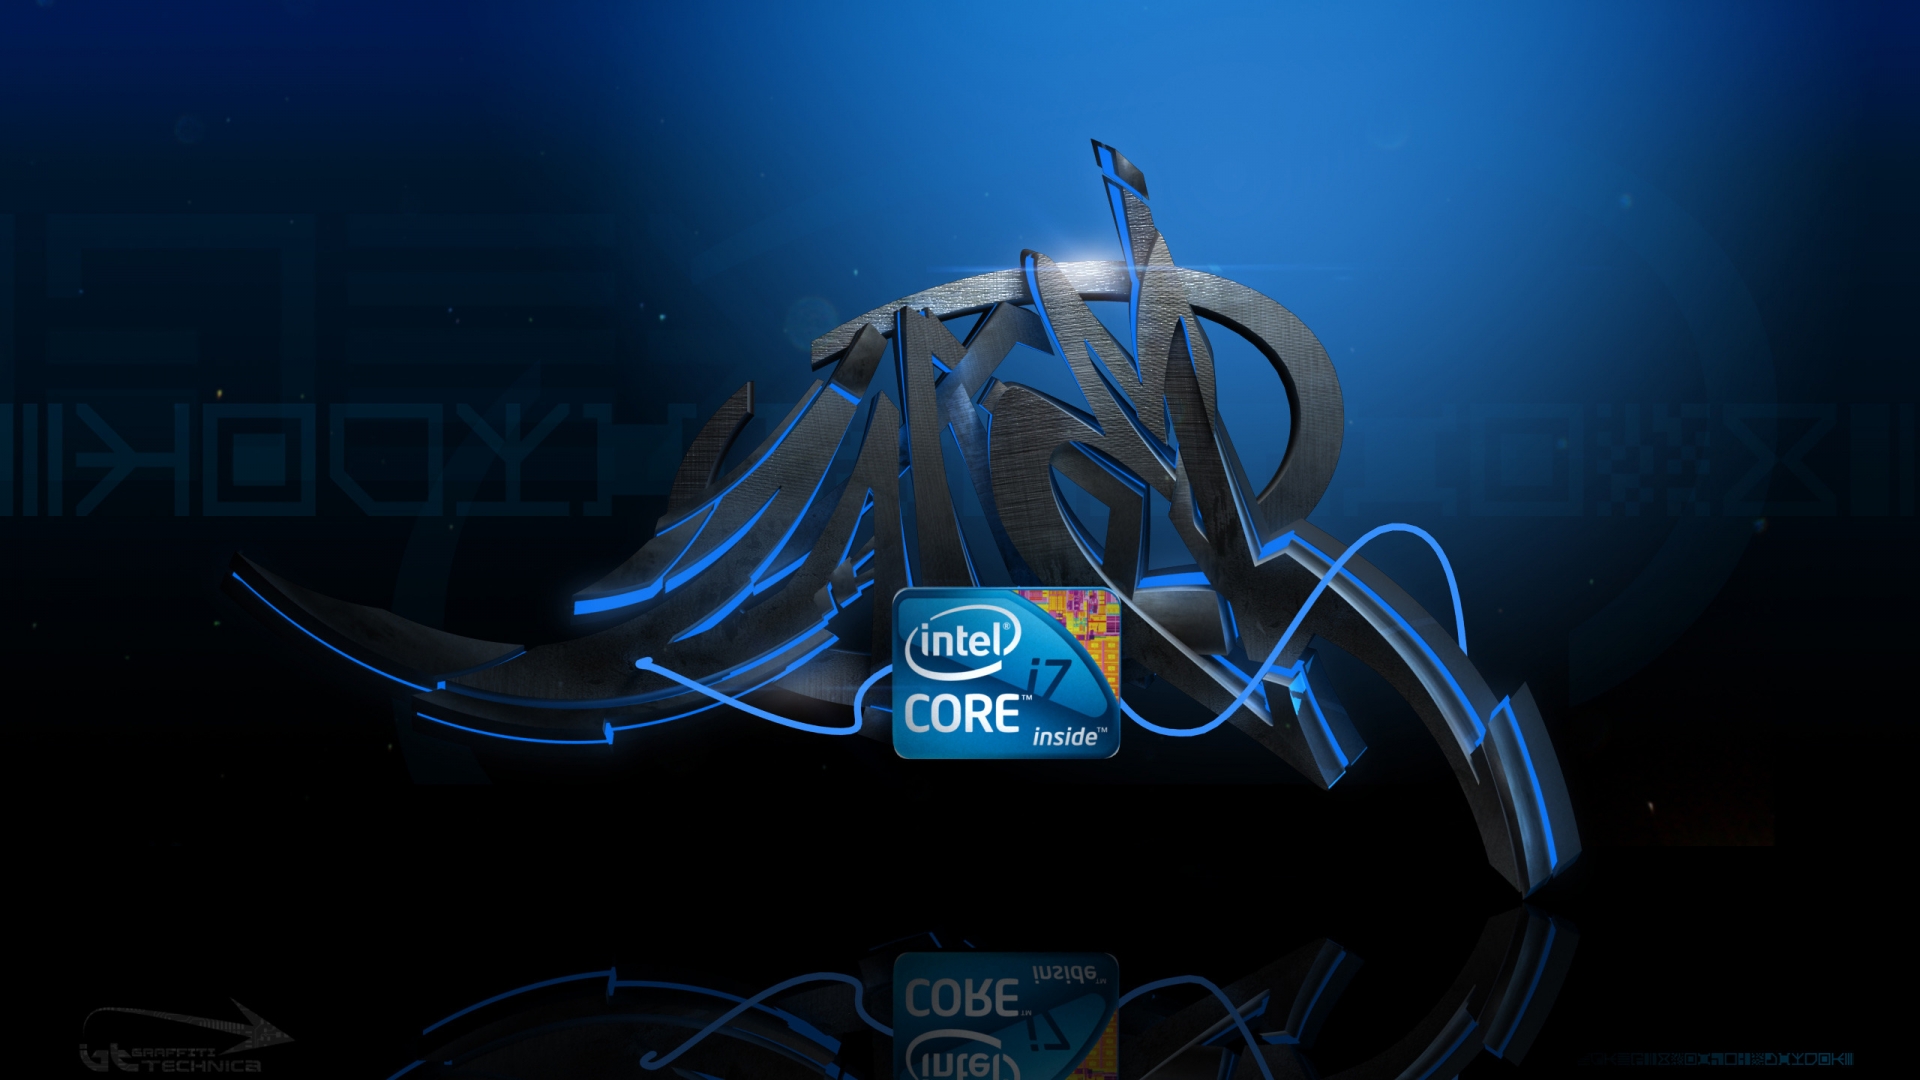 Intel i7 Graffiti for 1920 x 1080 HDTV 1080p resolution